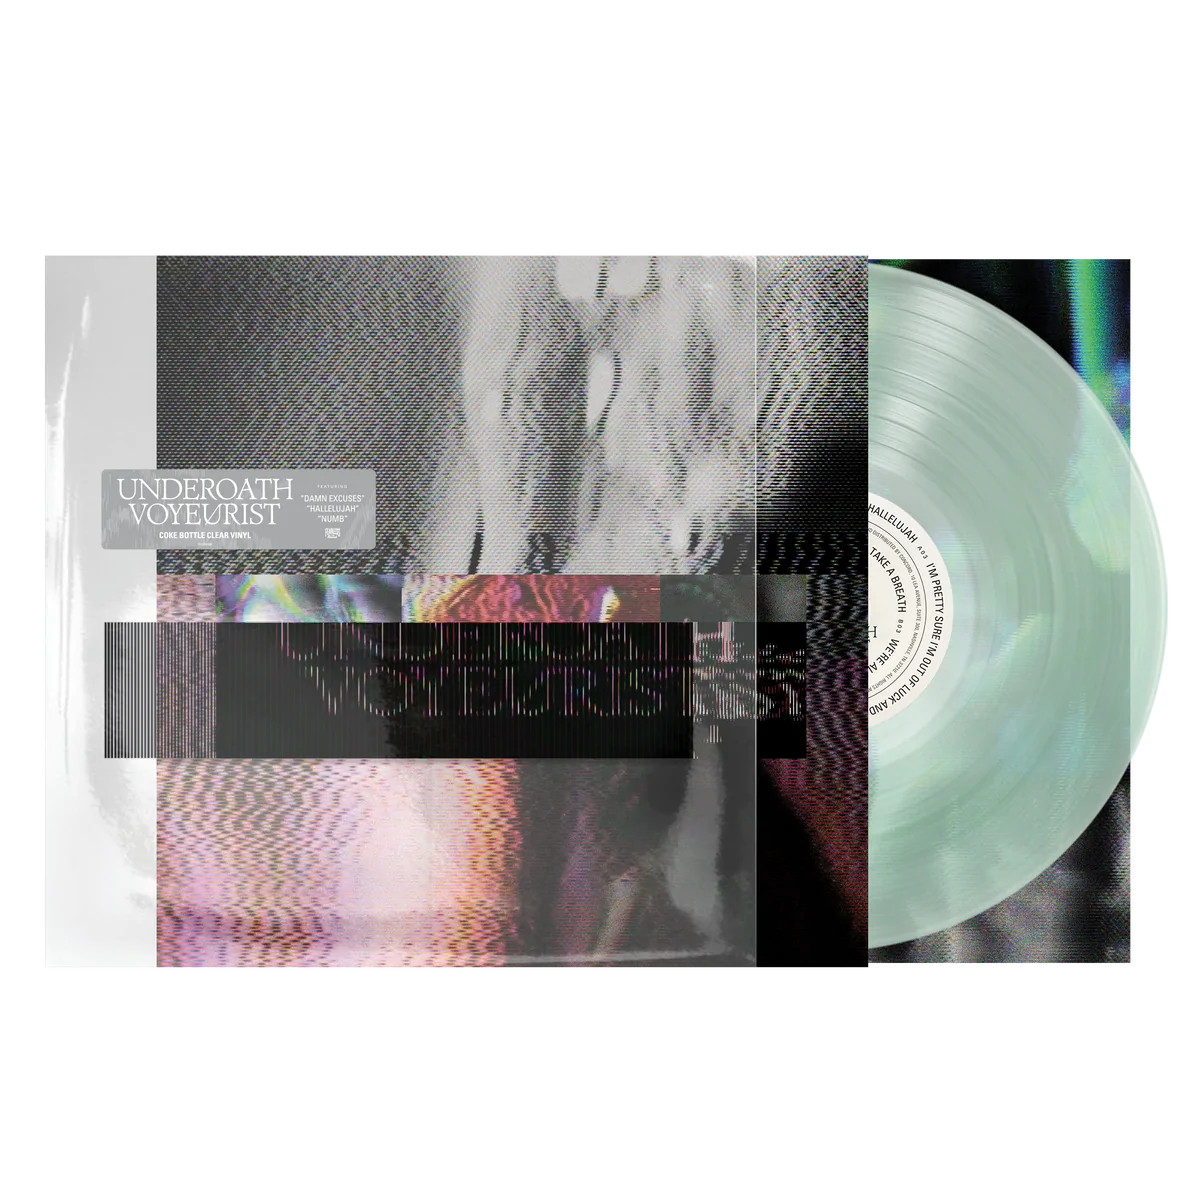 Underoath - Voyeurist LP (Coke Bottle Clear Vinyl, Deluxe Edition Animated Sleeve, Limited to 3000)